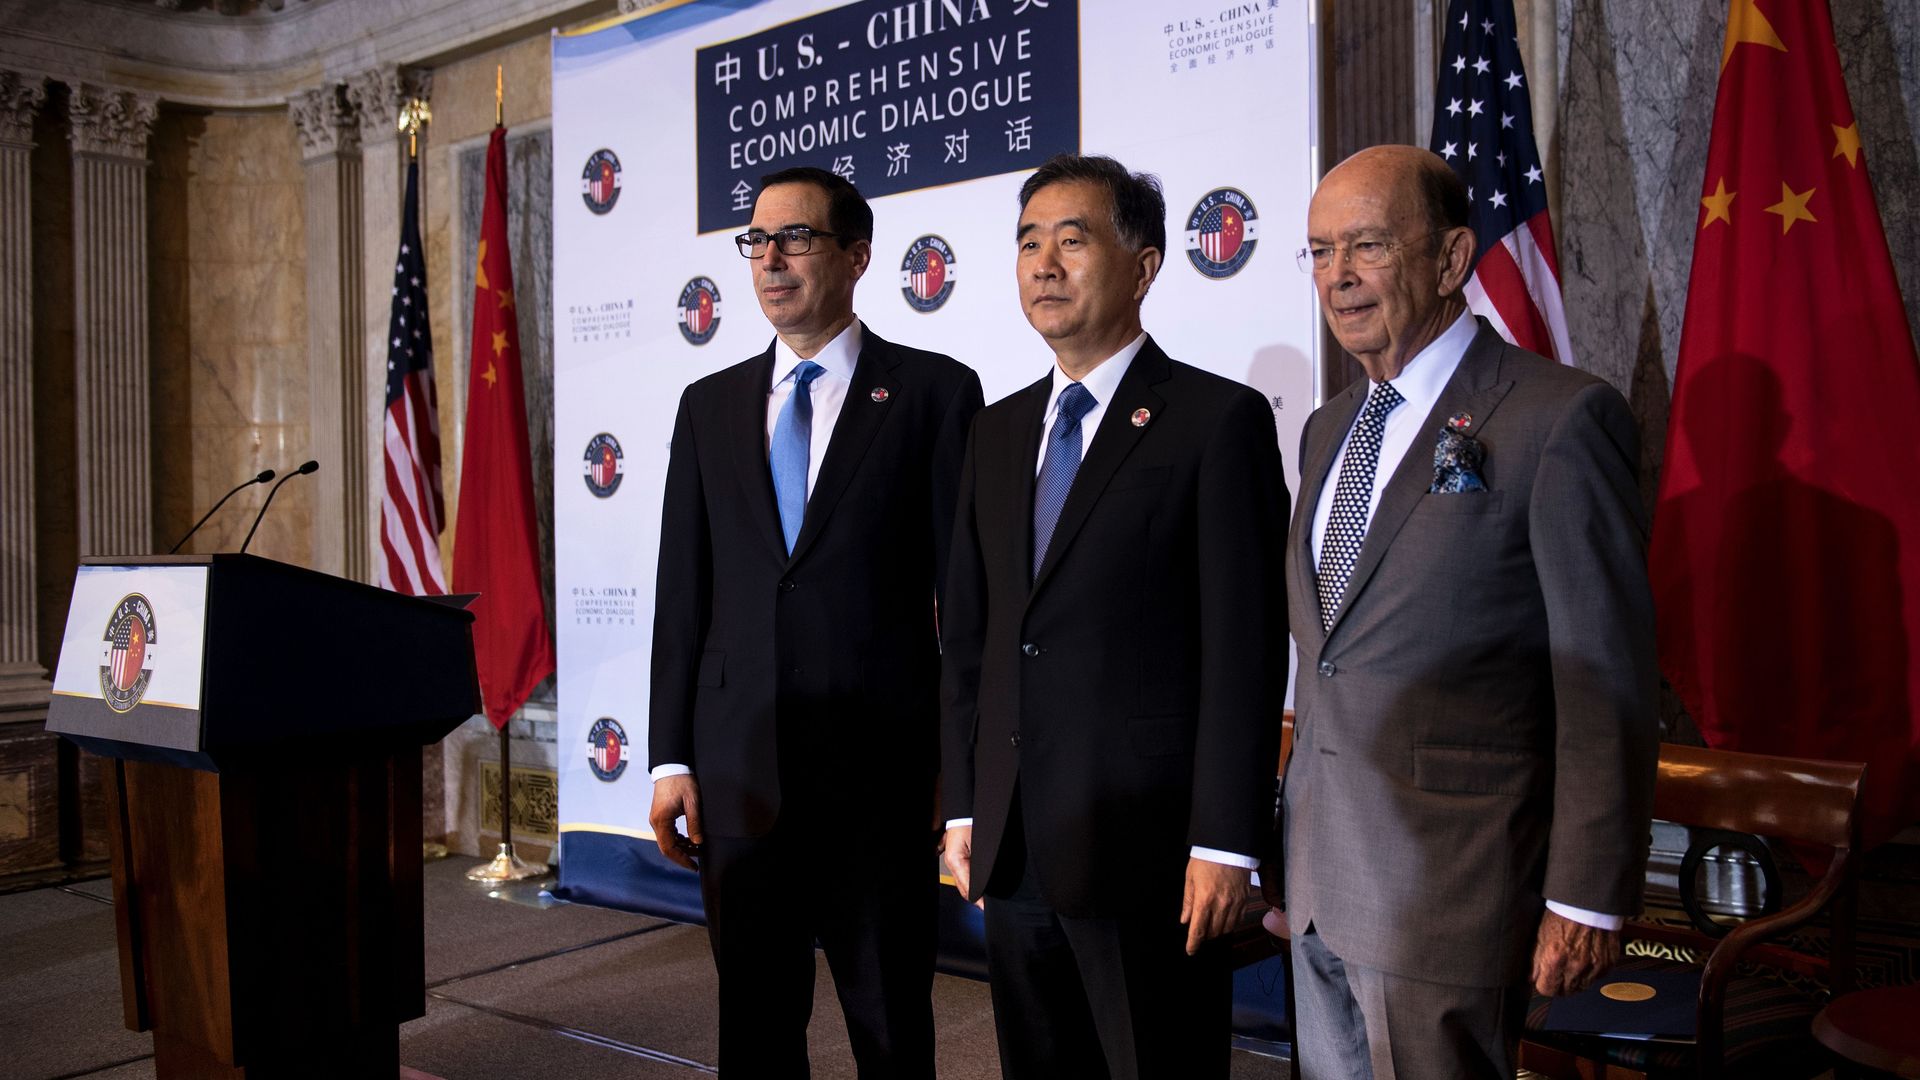 US Secretary of the Treasury Steven Mnuchin, Chinese Vice Premier Wang Yang and US Secretary of Commerce Wilbur Ross pose for a photo